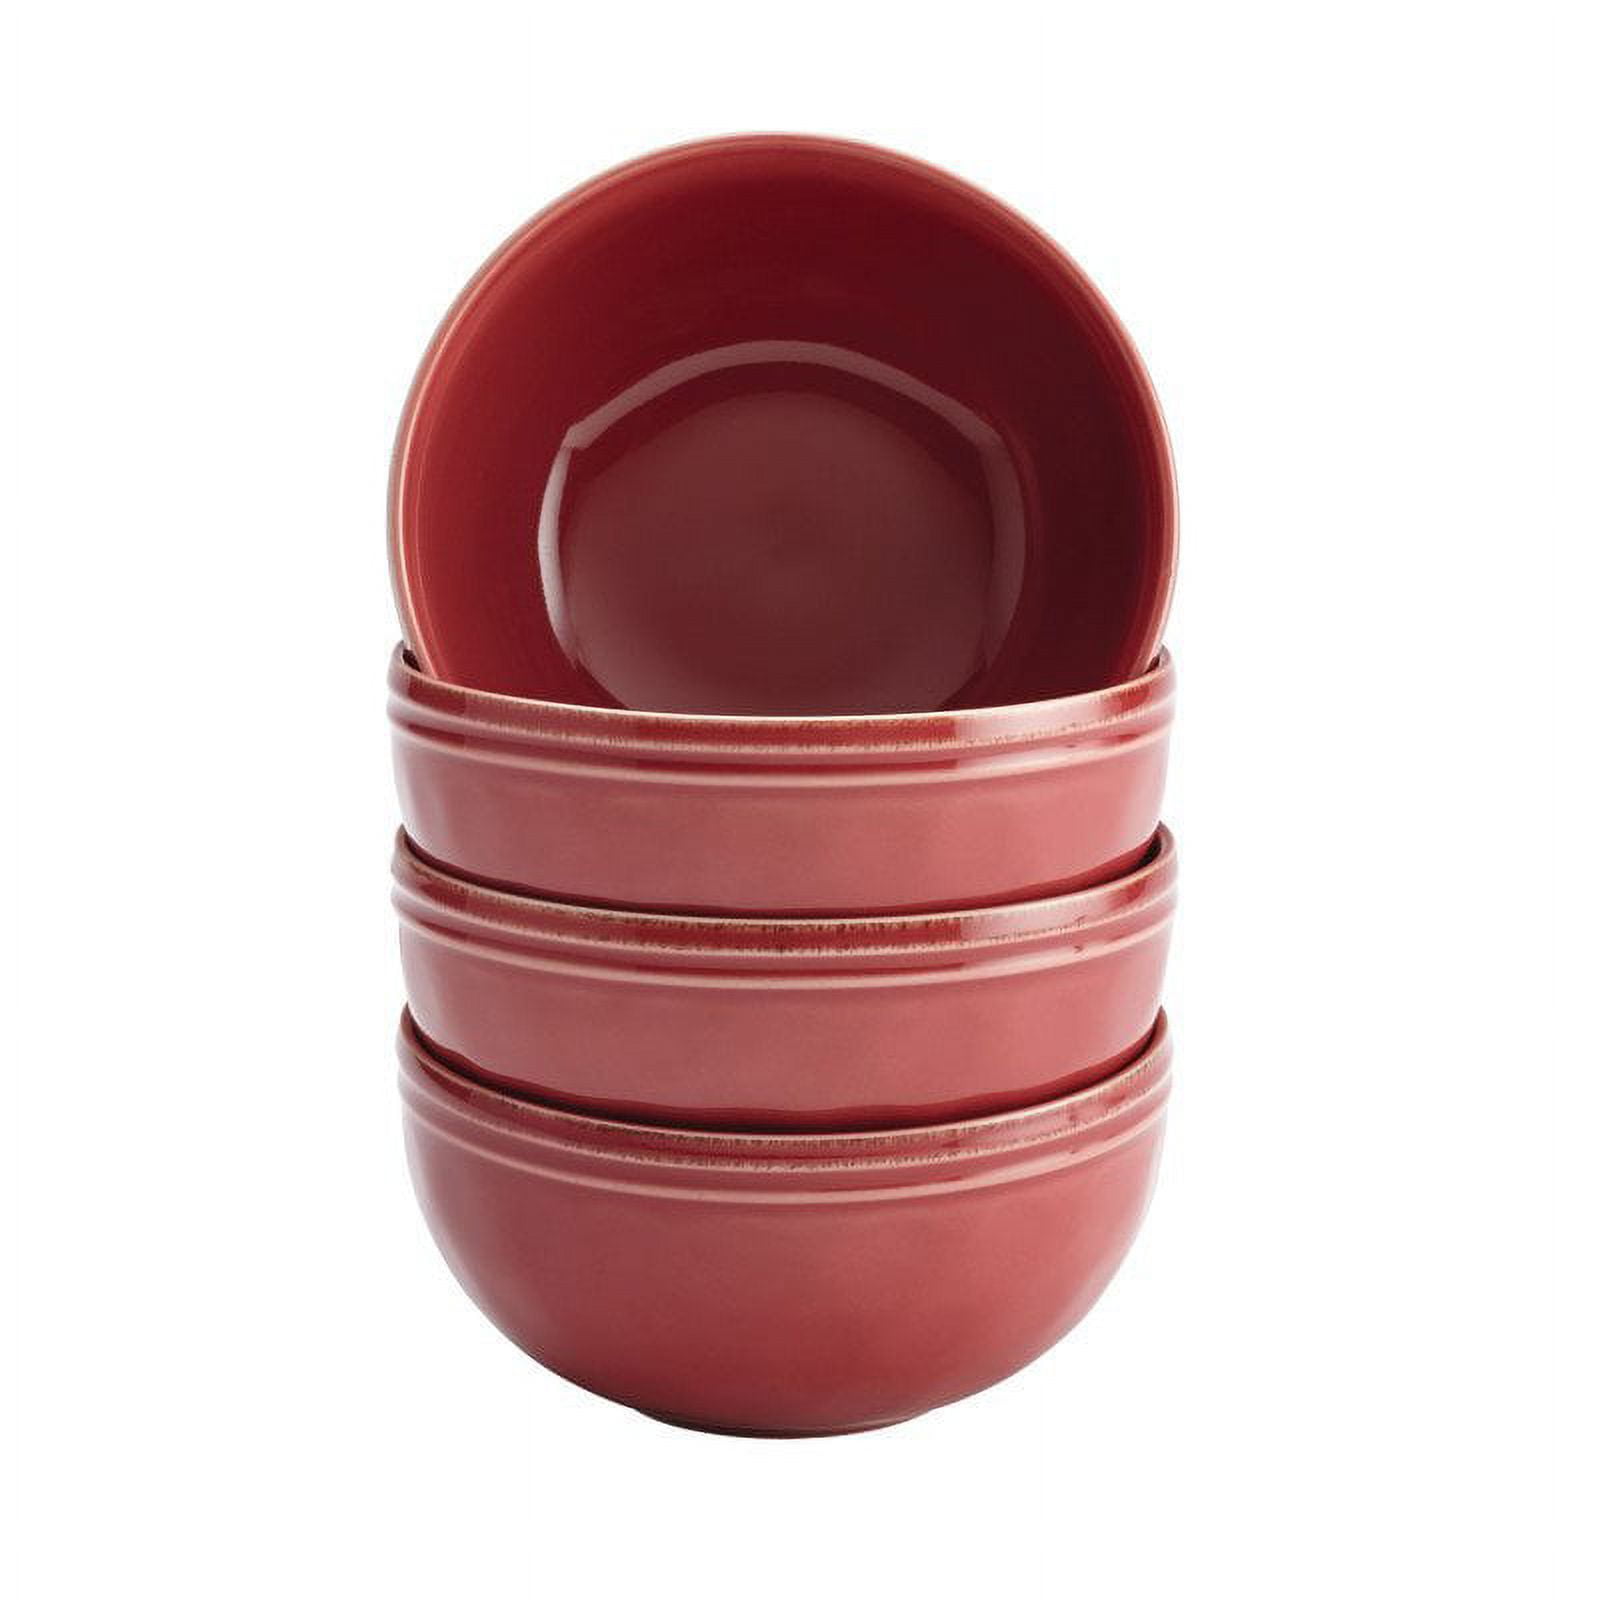 Rachael Ray 2-Piece Ceramic Mixing Bowl Set, Red